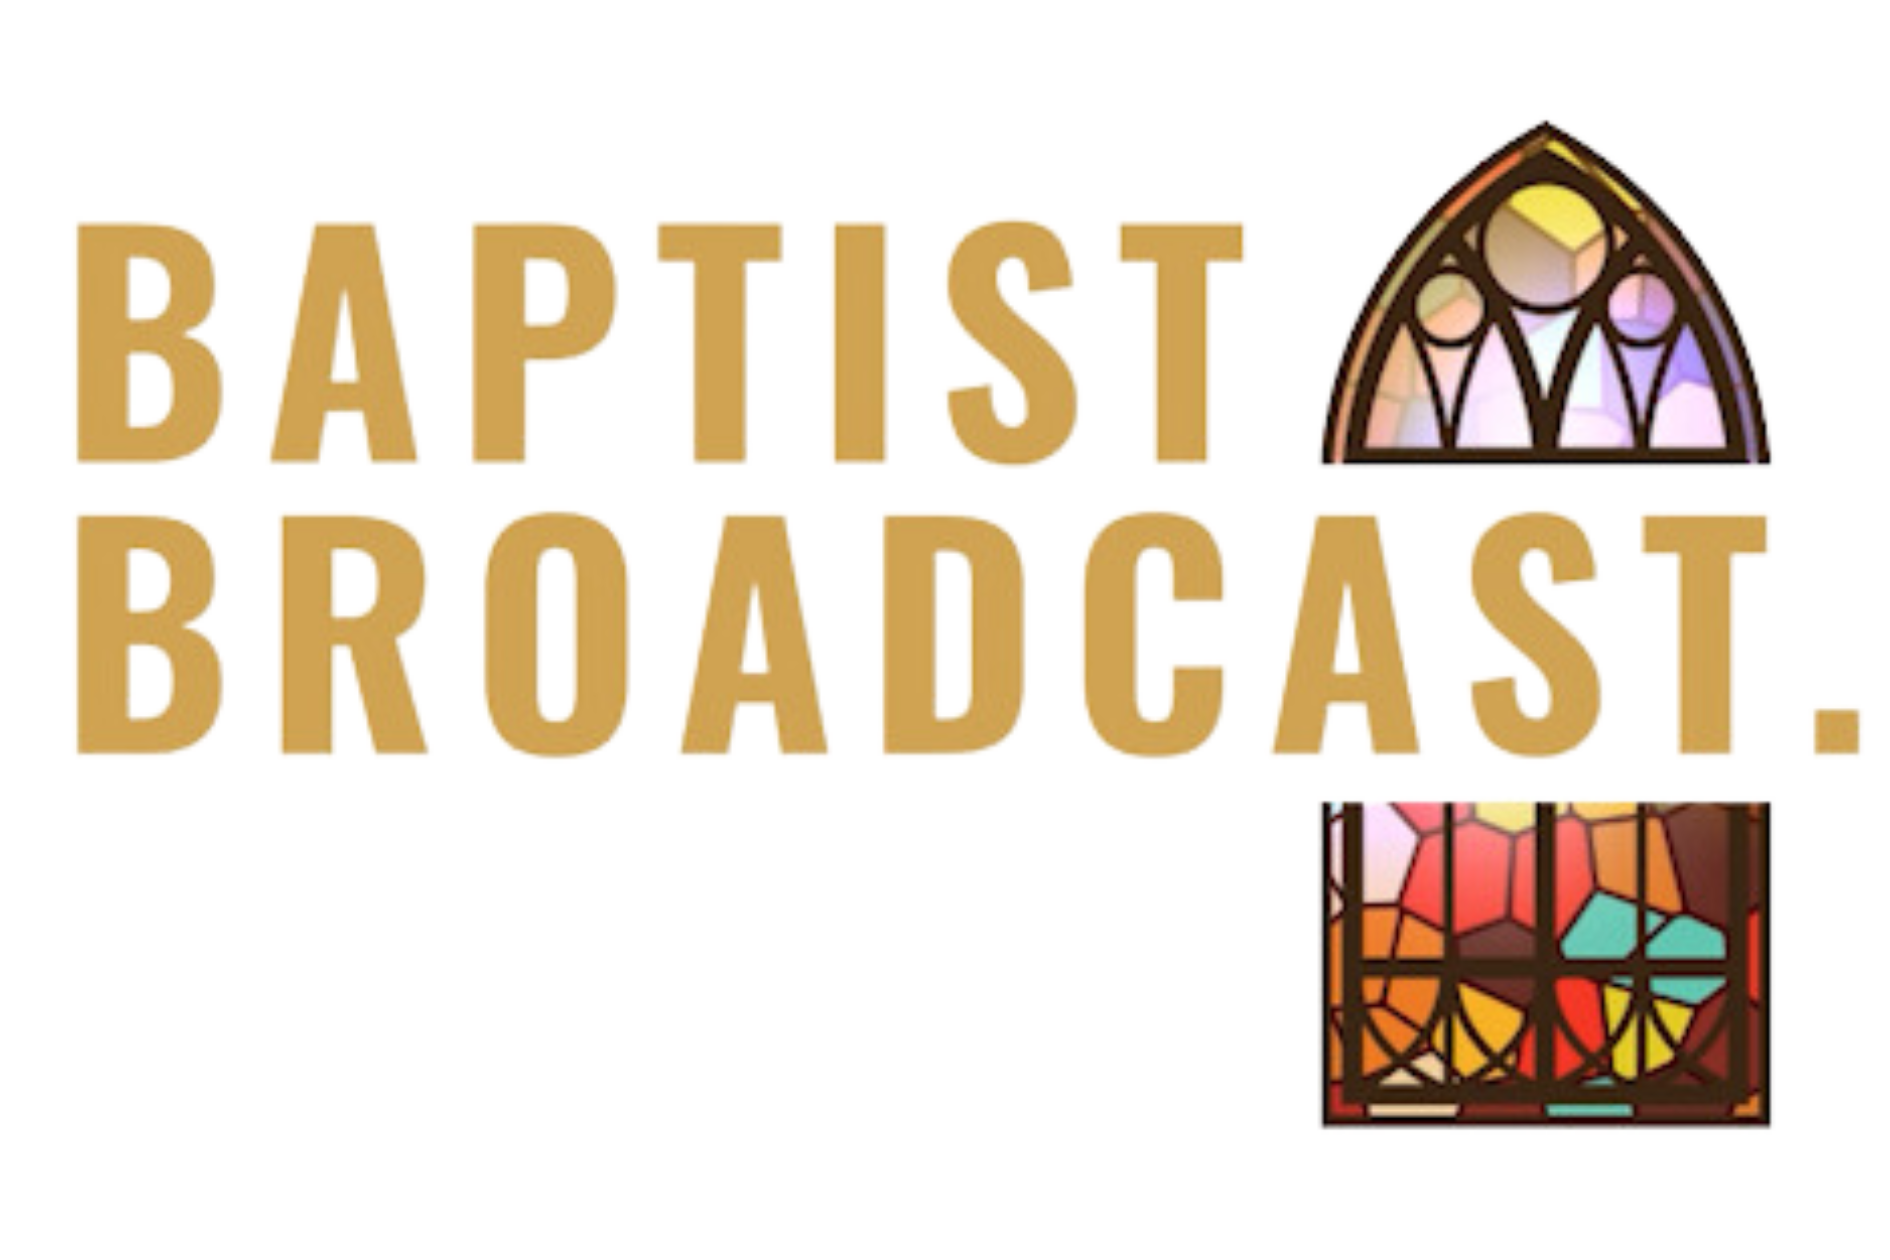 The Baptist Broadcast